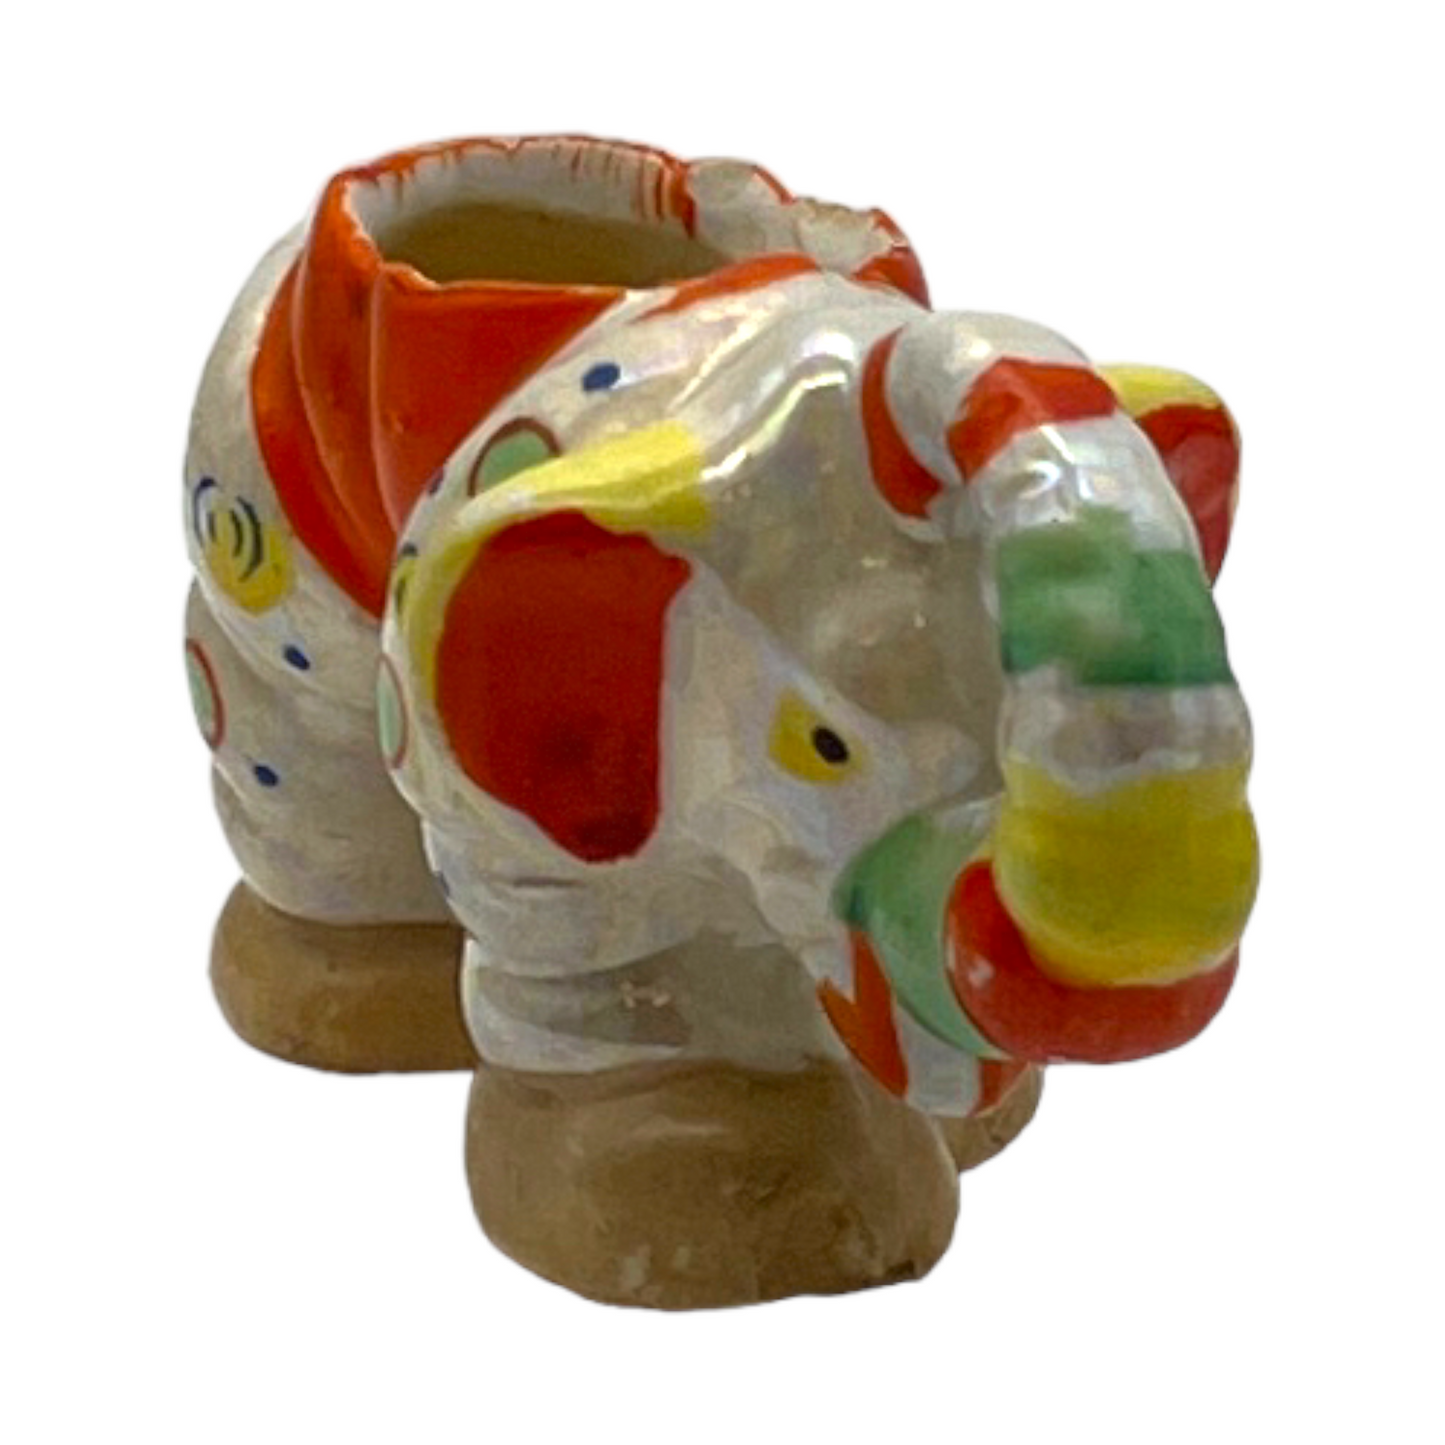 Ceramic - Clown Elephant Figurine - Vintage - 2"